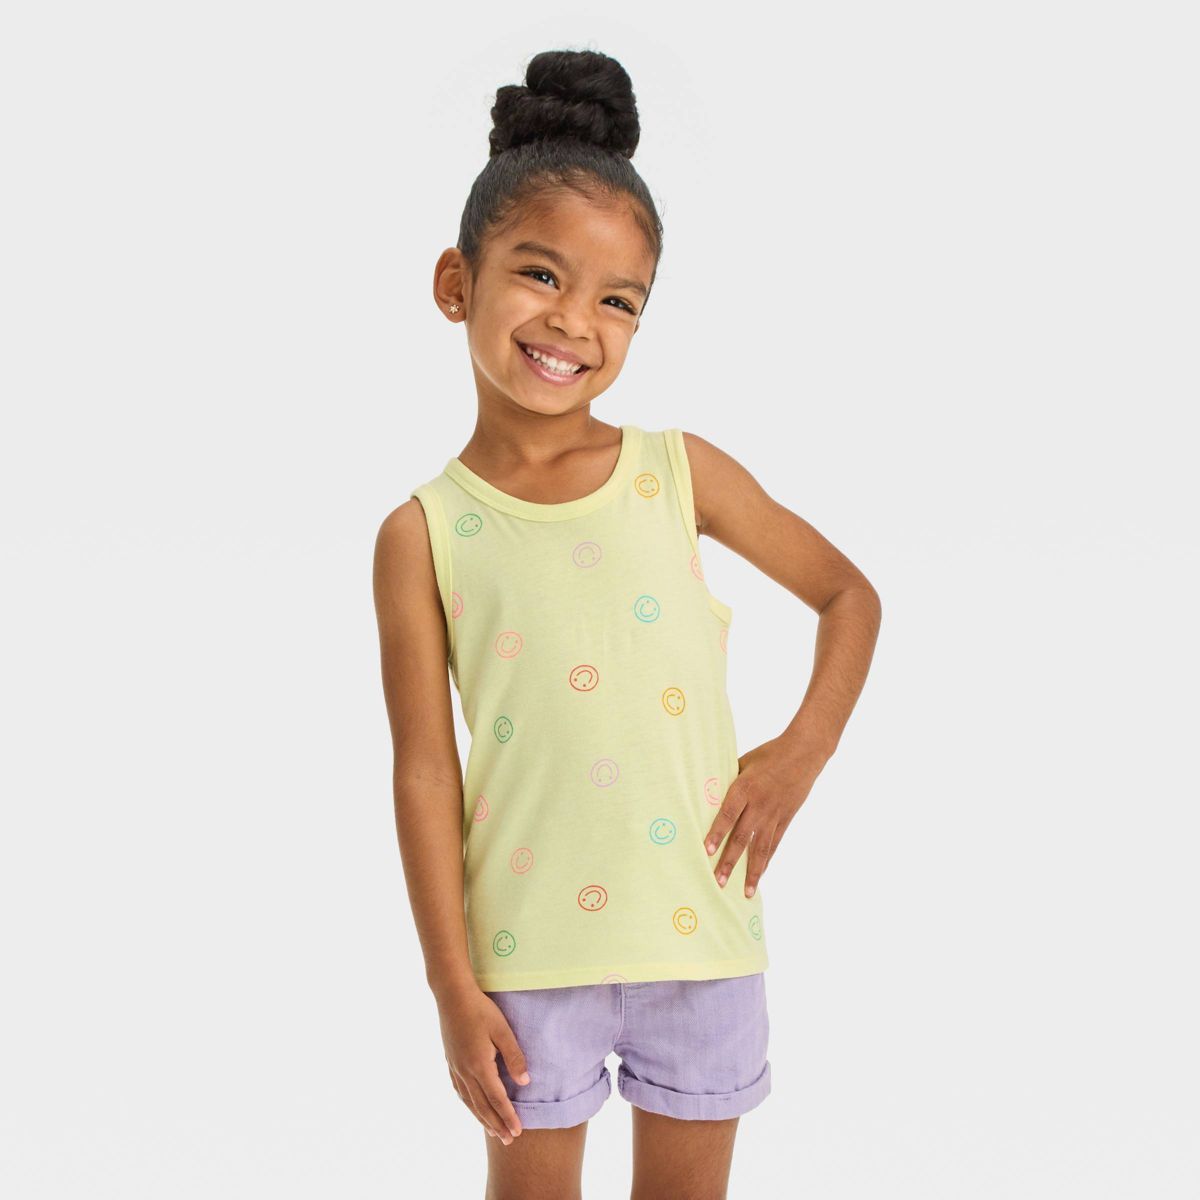 Toddler Girls' Smiles Tank Top - Cat & Jack™ Light Yellow | Target